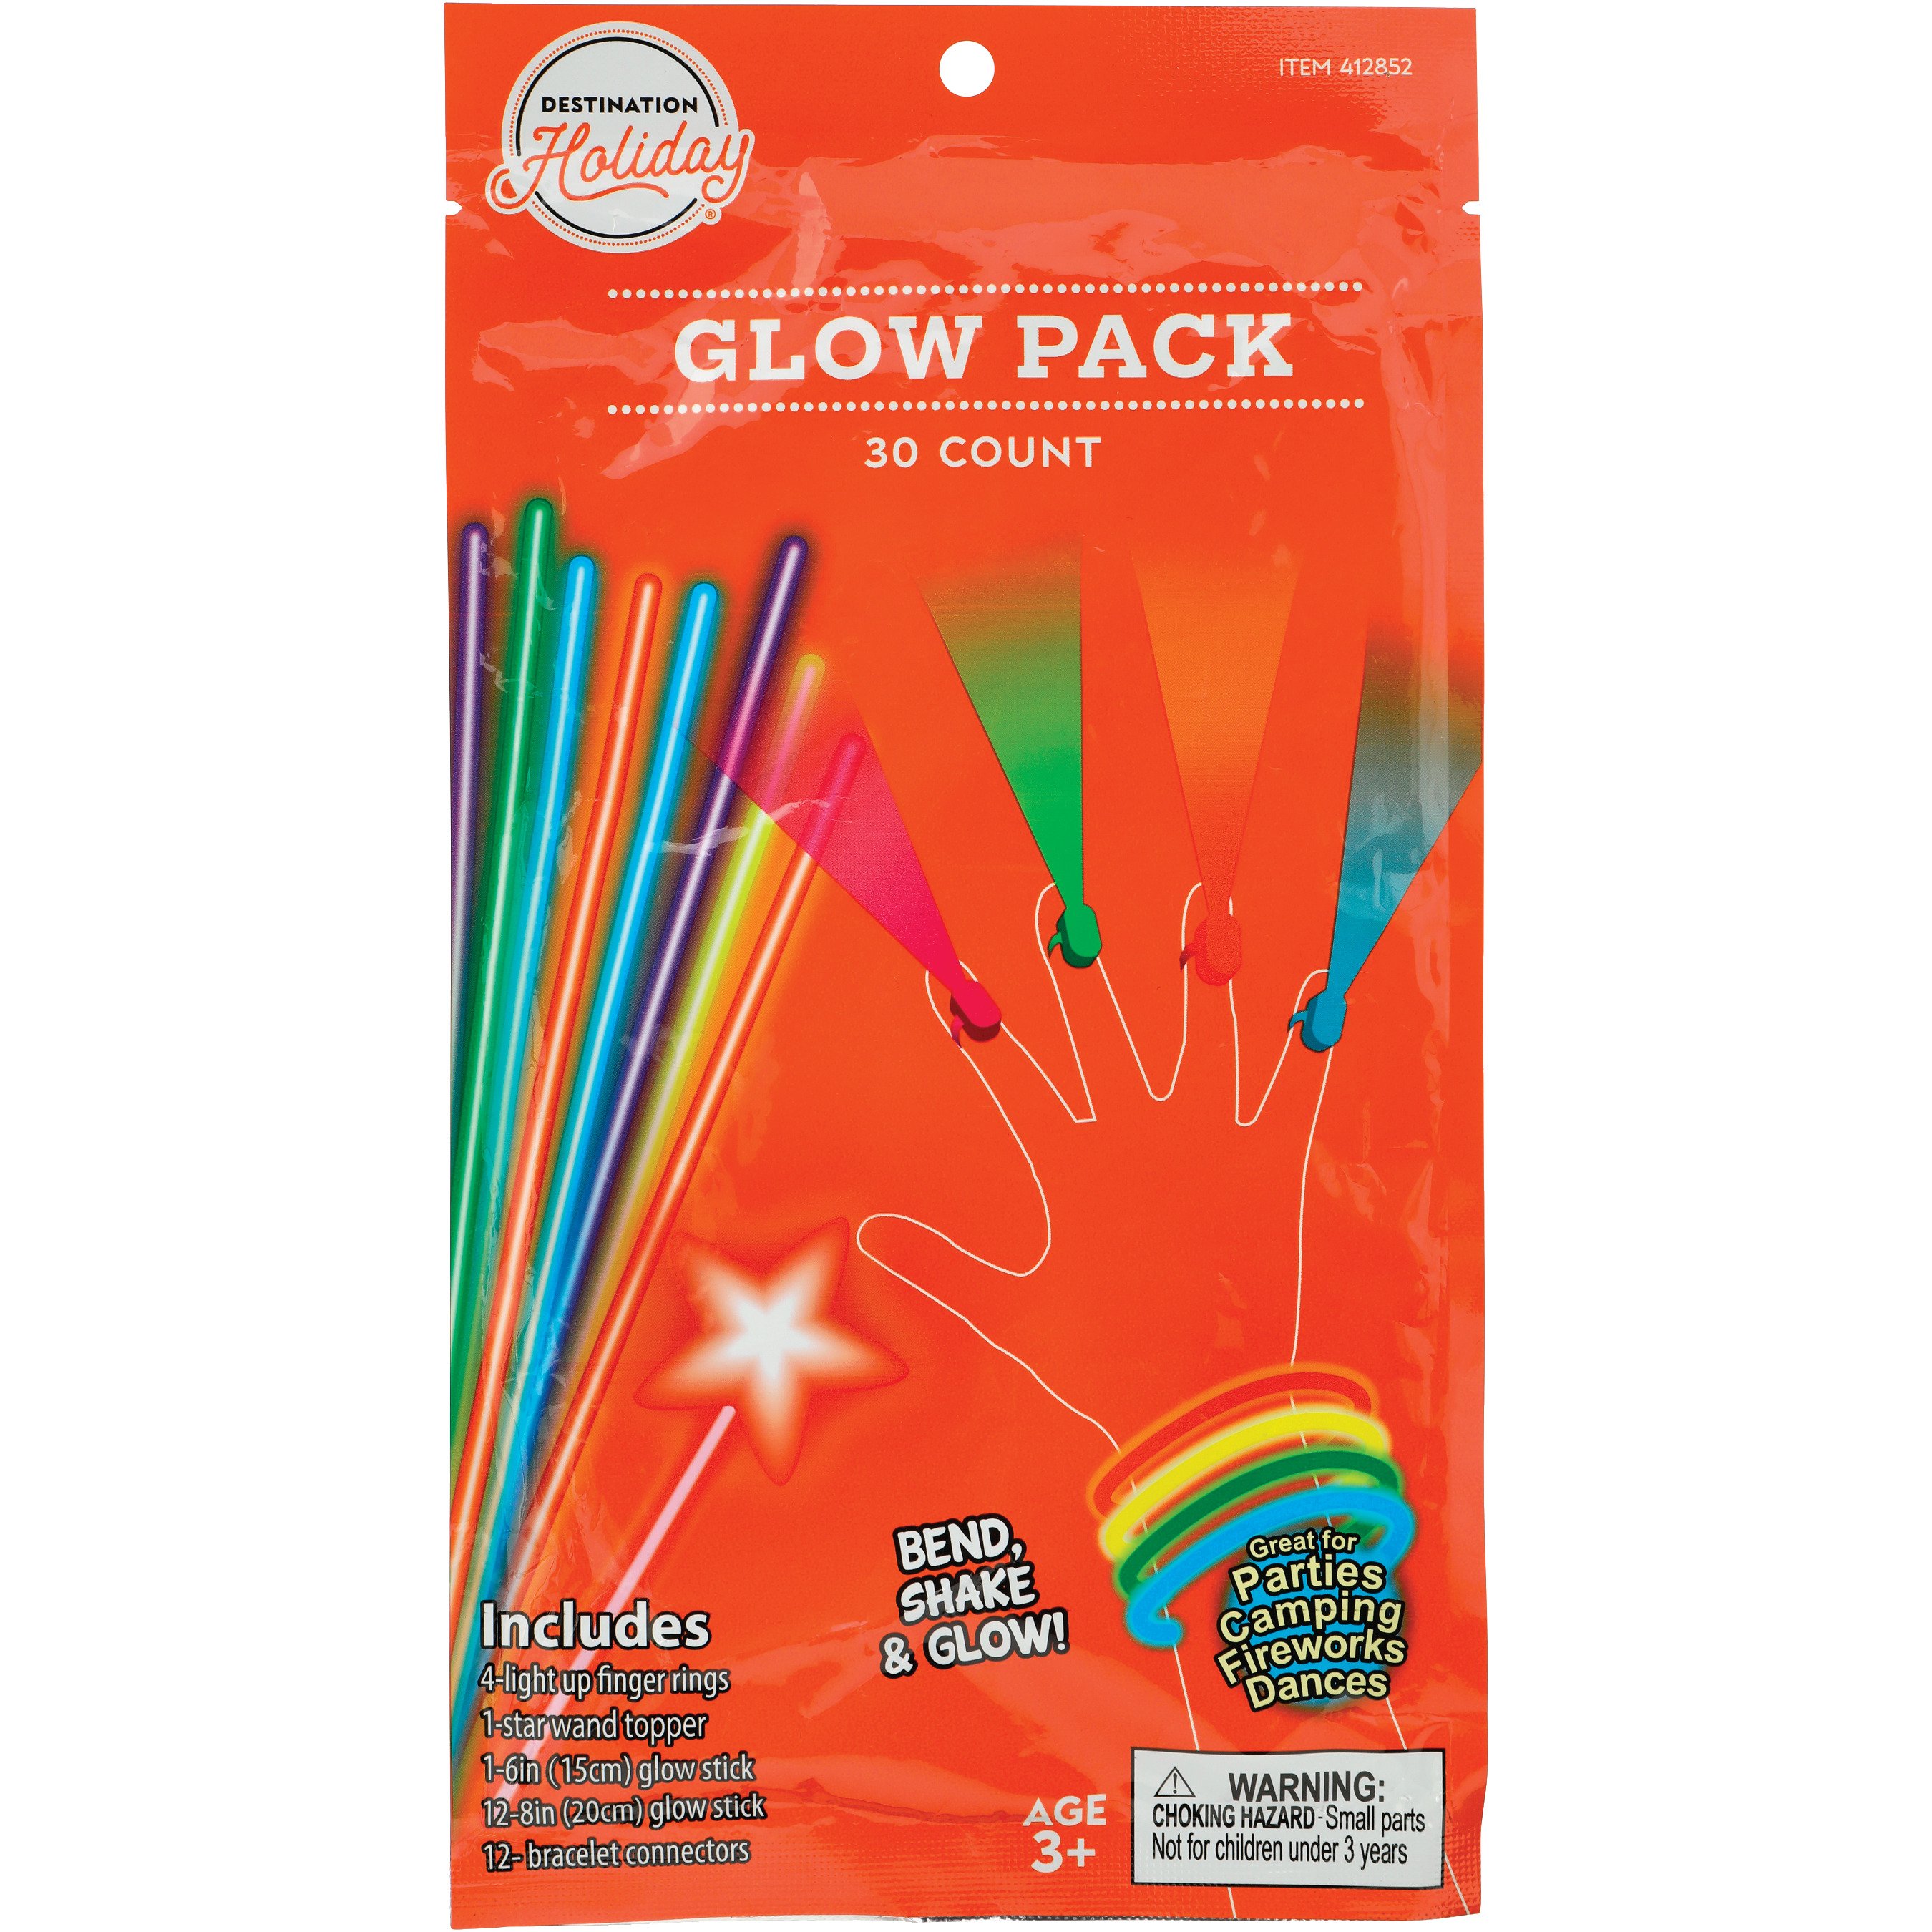 Shake and Glow Pack